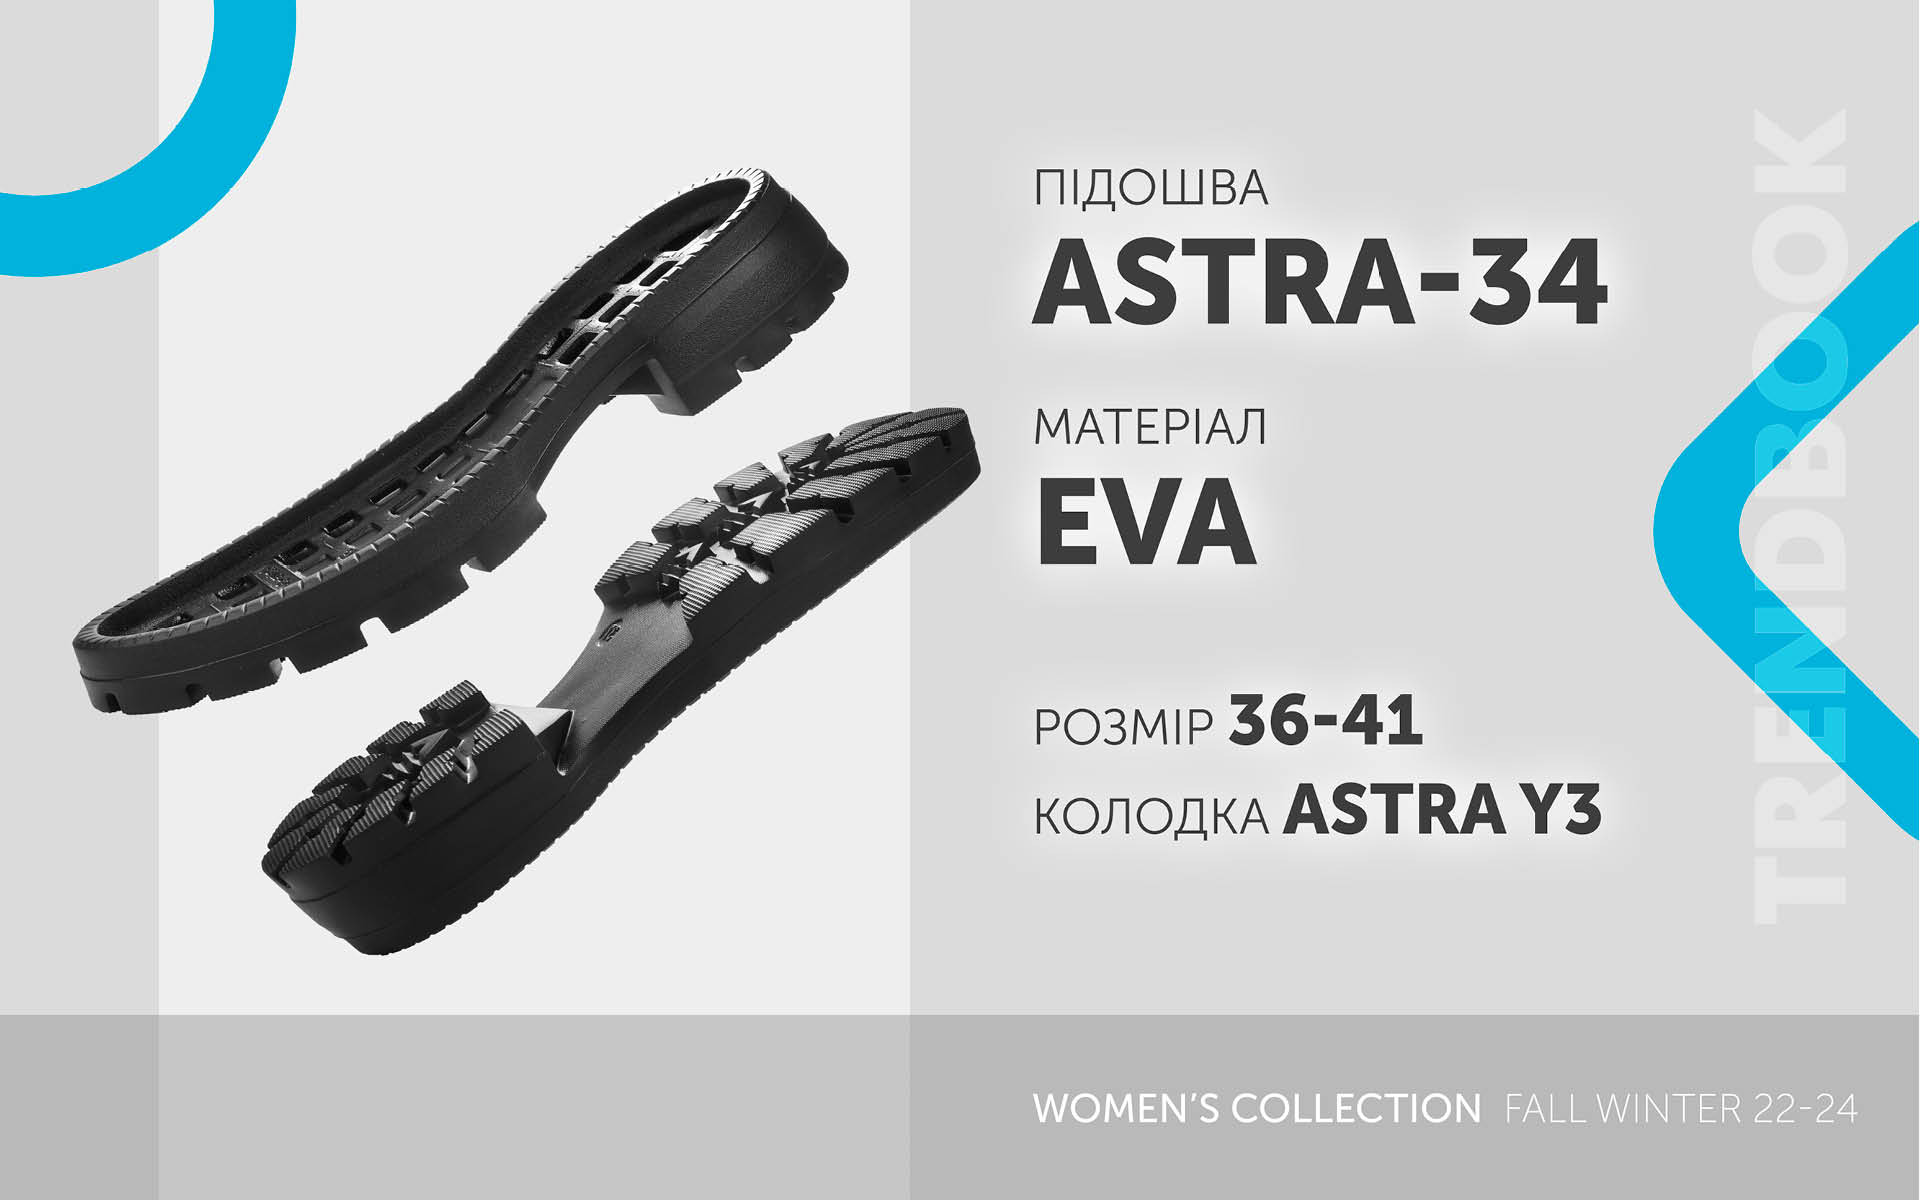 Astra-34